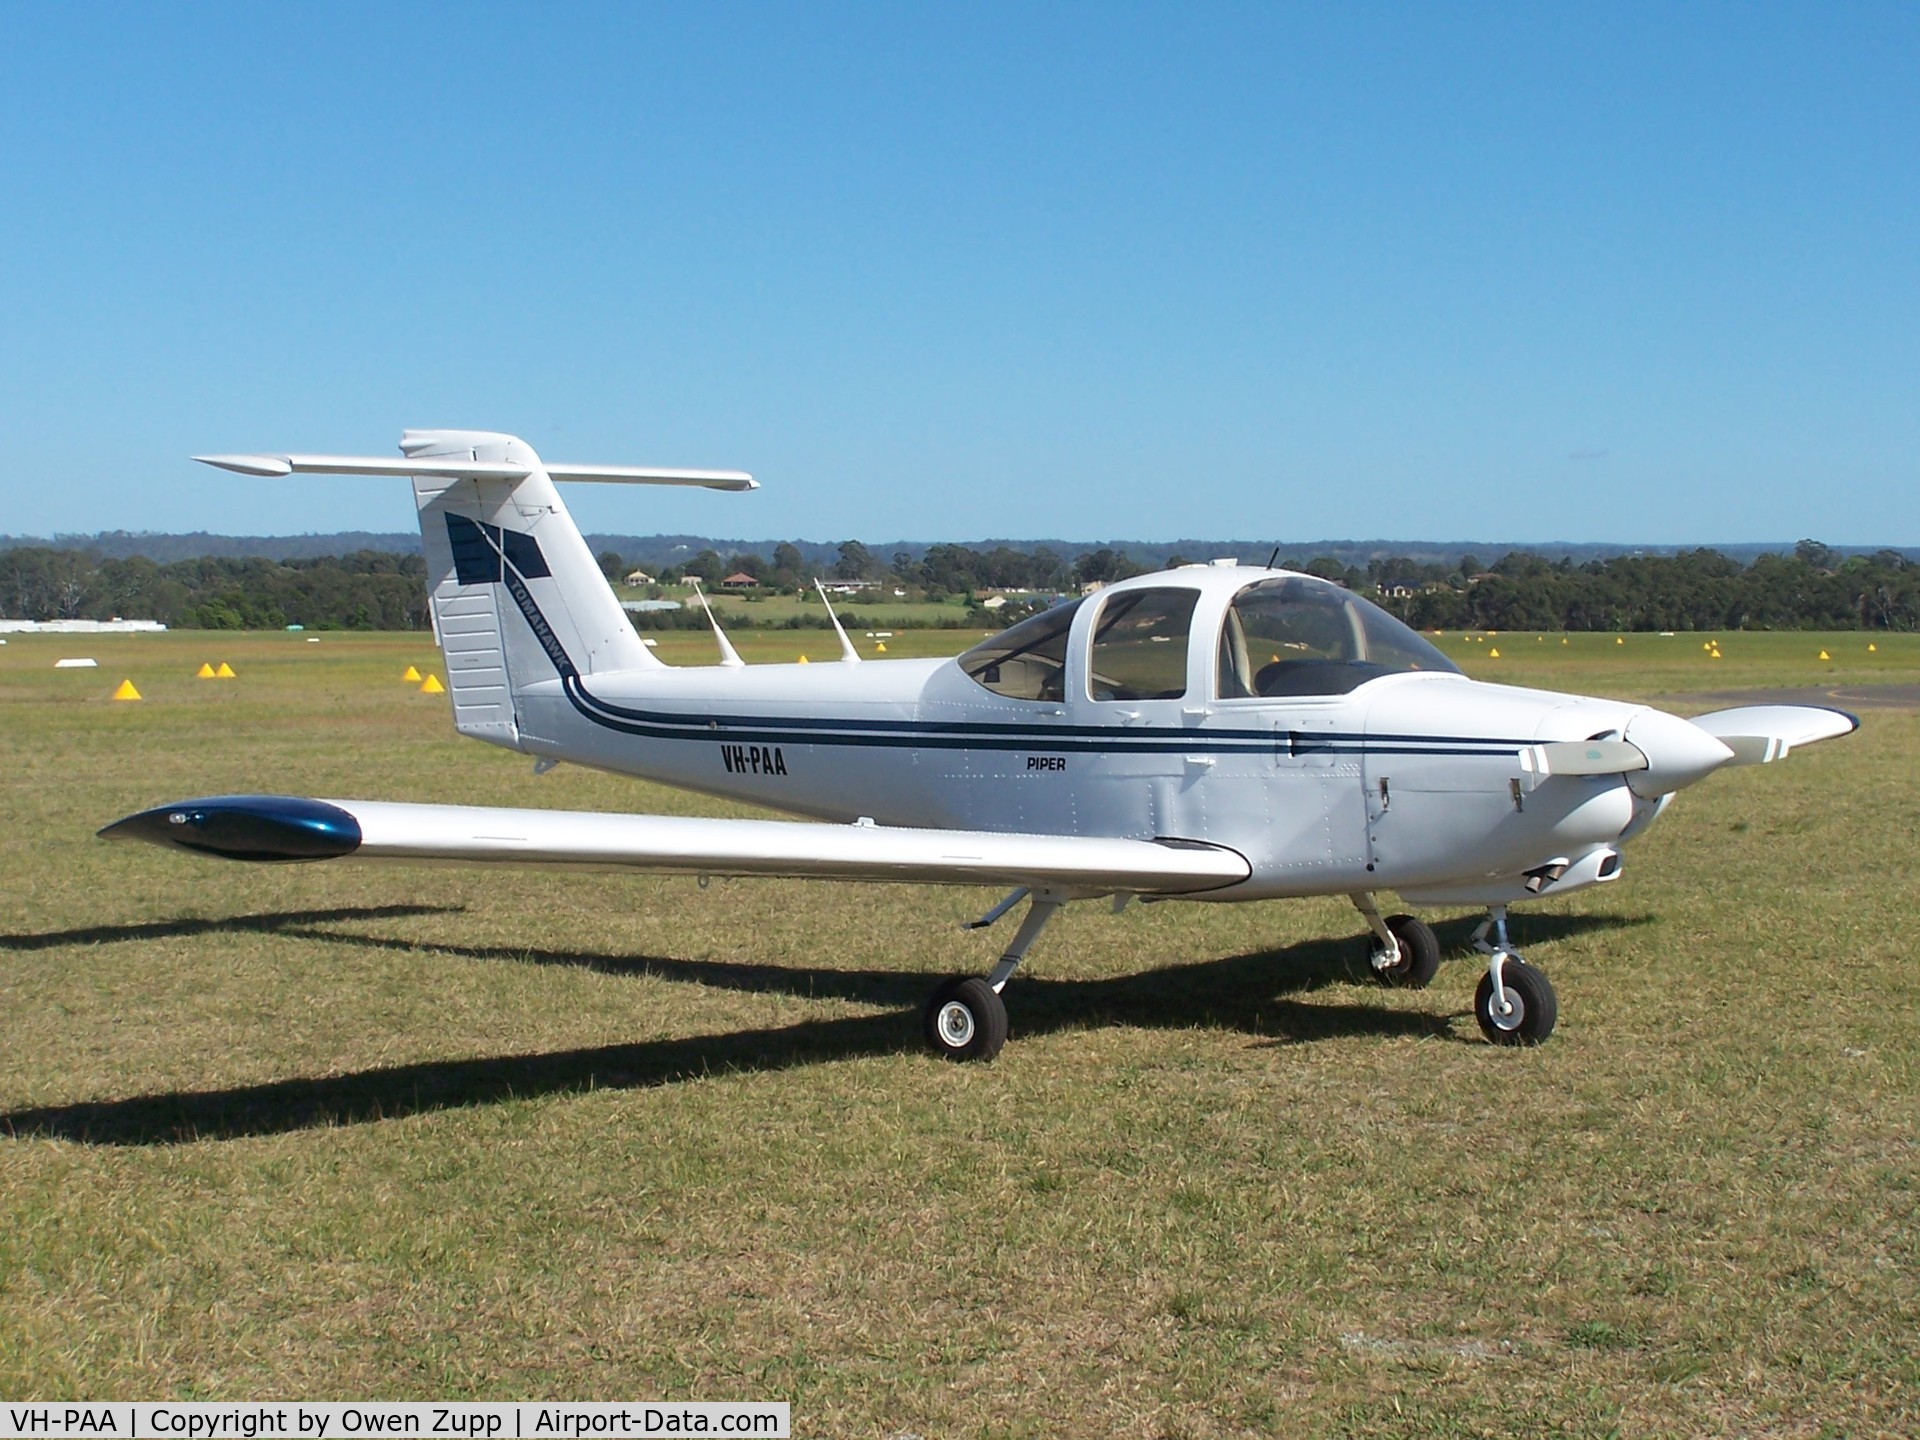 VH-PAA, 1979 Piper PA-38-112 Tomahawk Tomahawk C/N 38-79A0423, PA38-112 VH-PAA at Camden NSW Australia. (Sept 06)